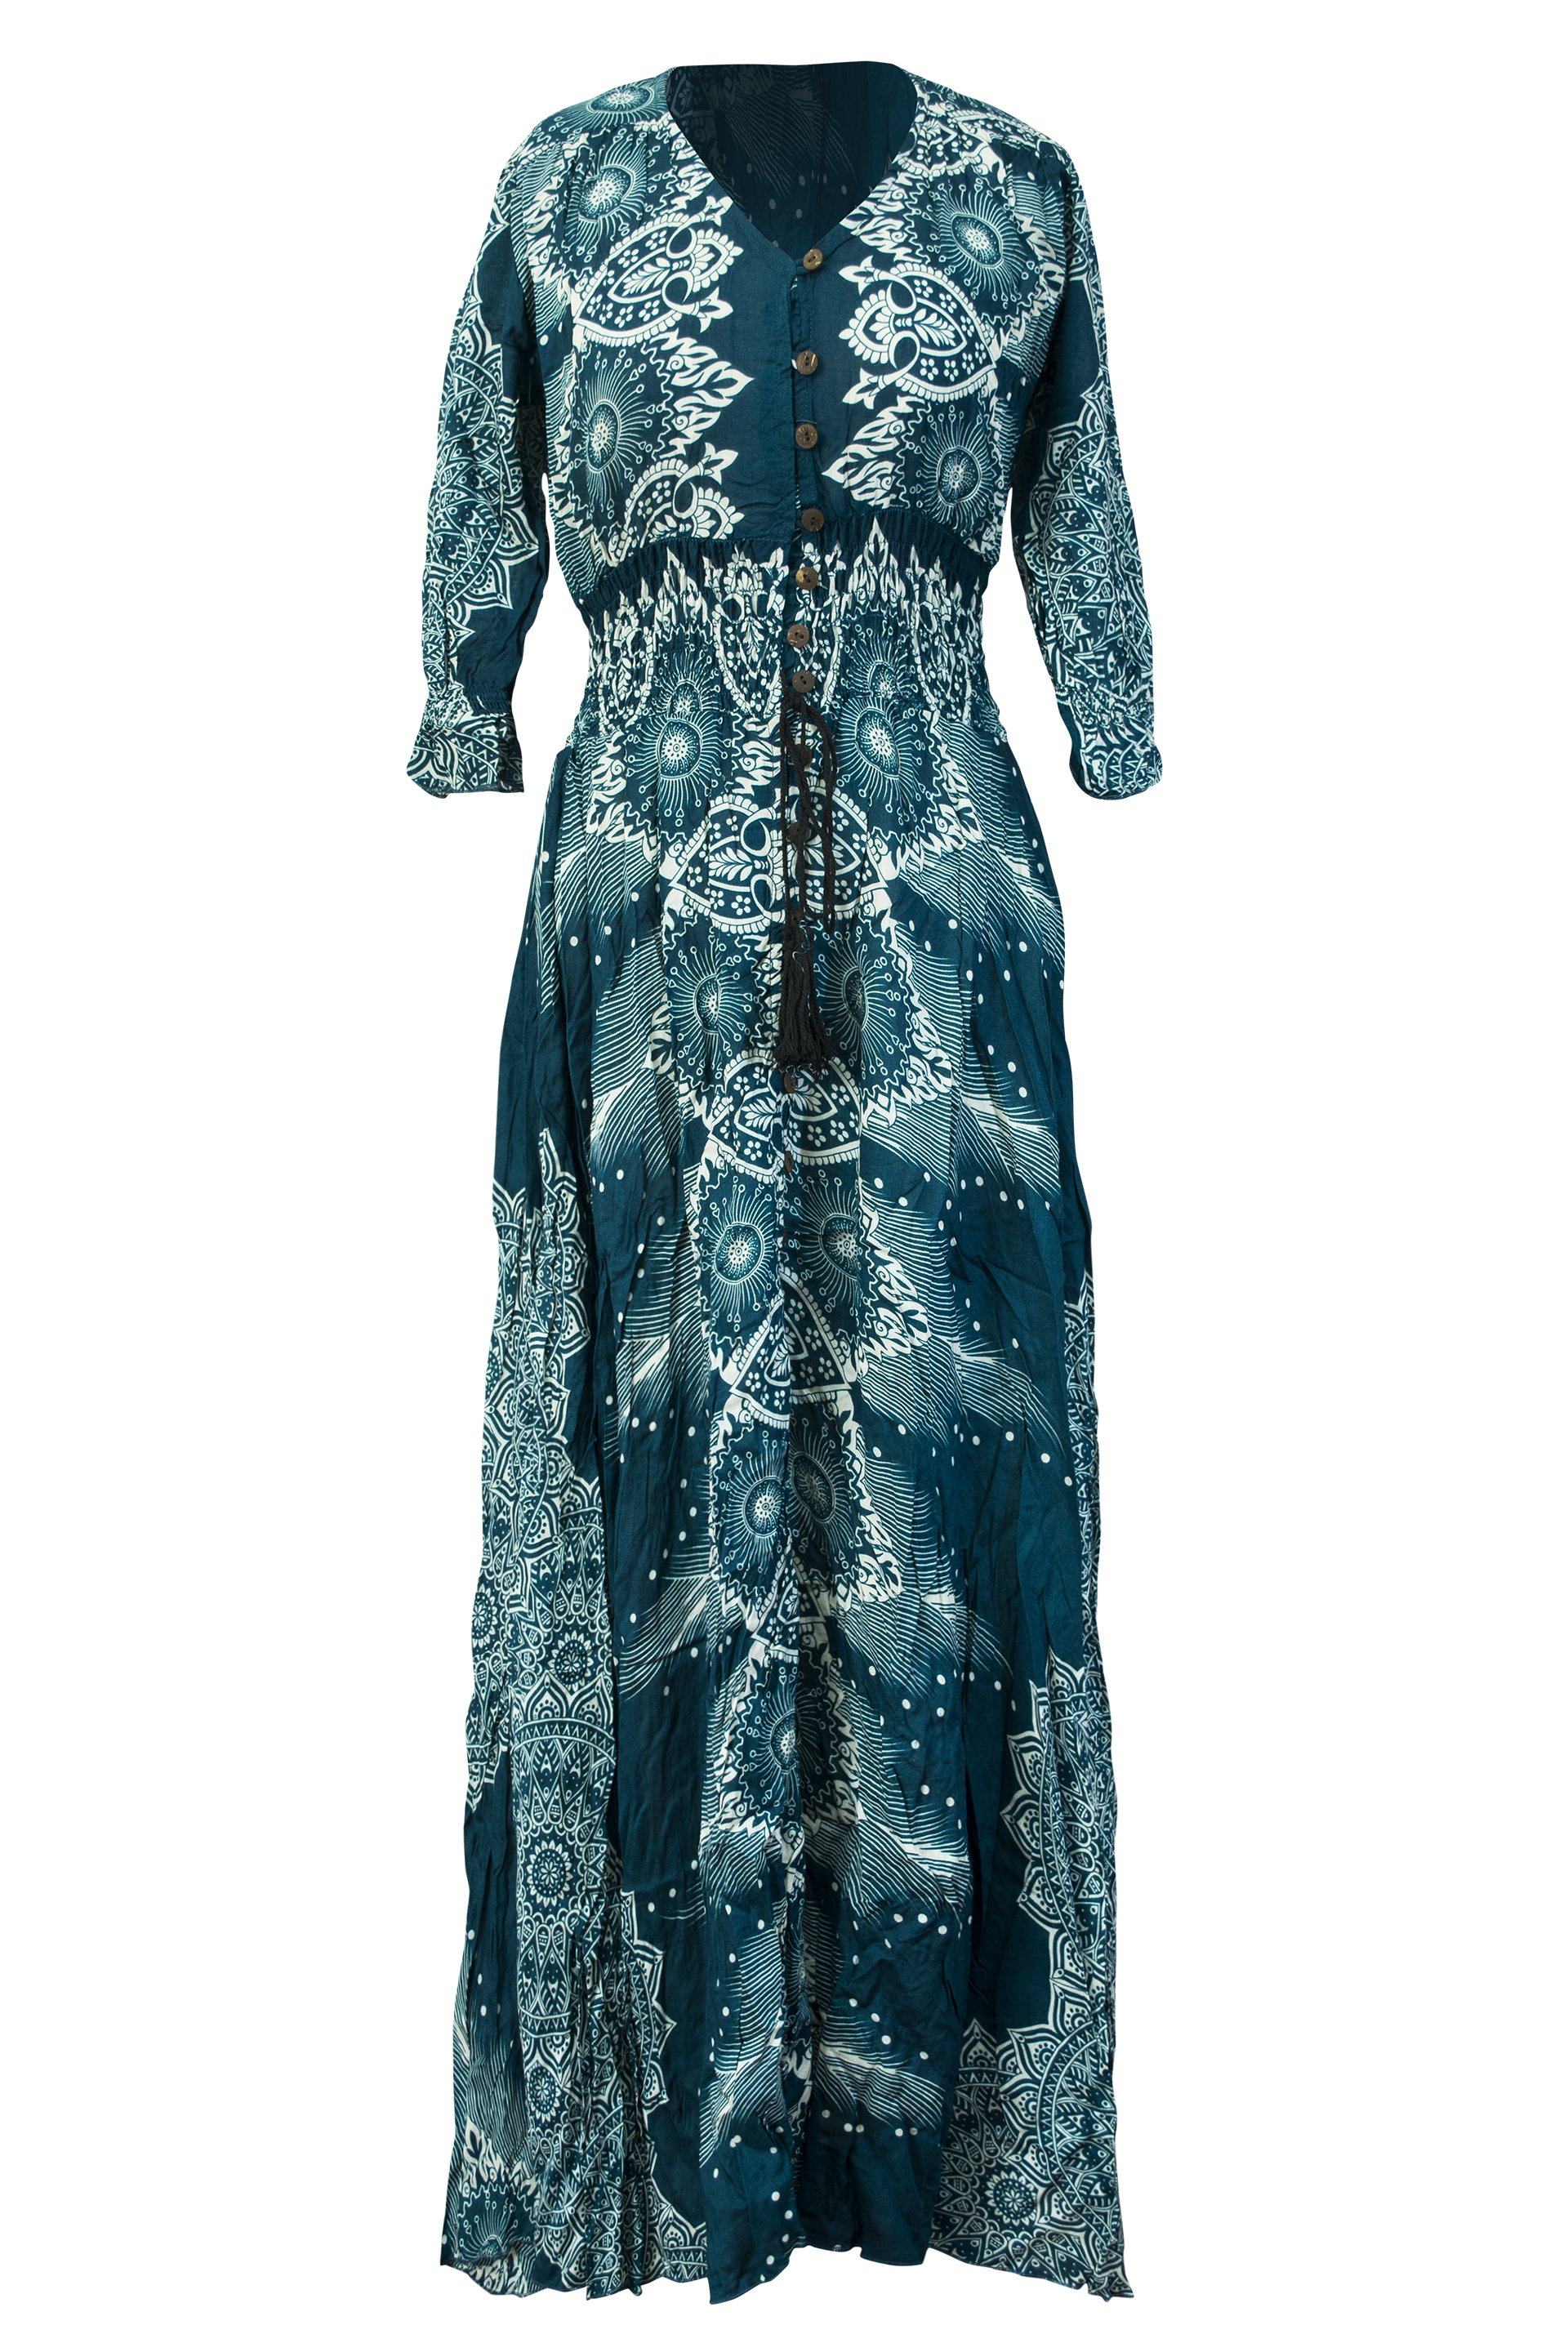 Printed Rayon Dress 3/4 Sleeve Mandala Casual Maxi Dress Beachwear Bohemian - CCCollections